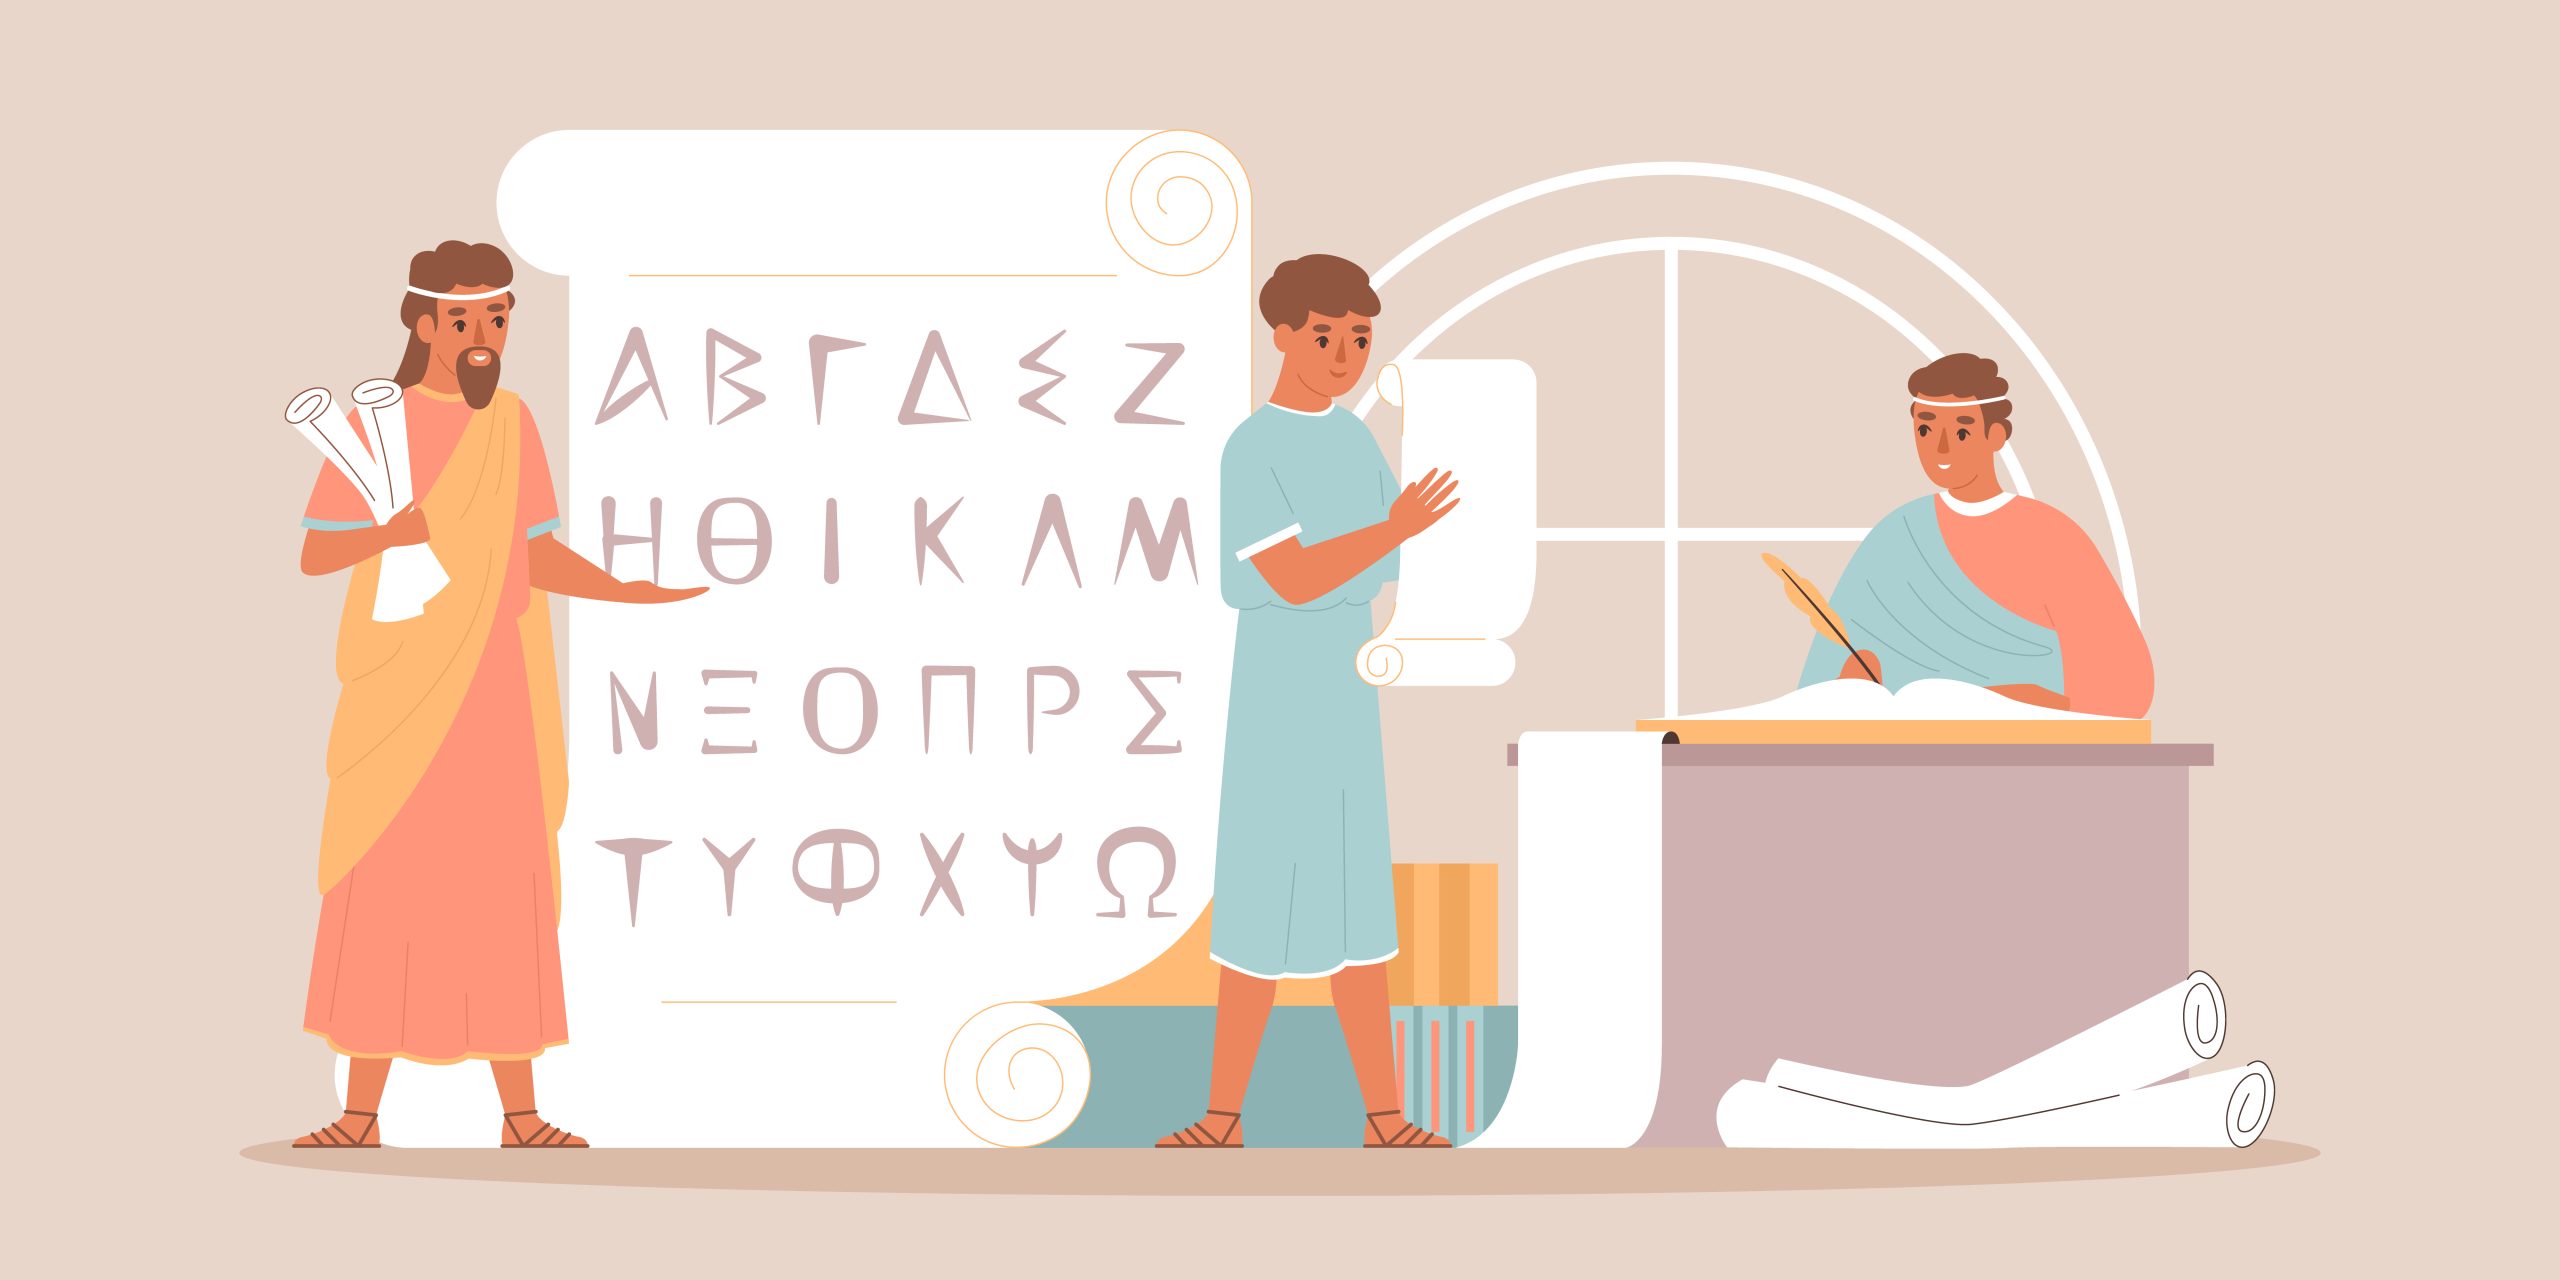 Alphabetic Writing Illustration